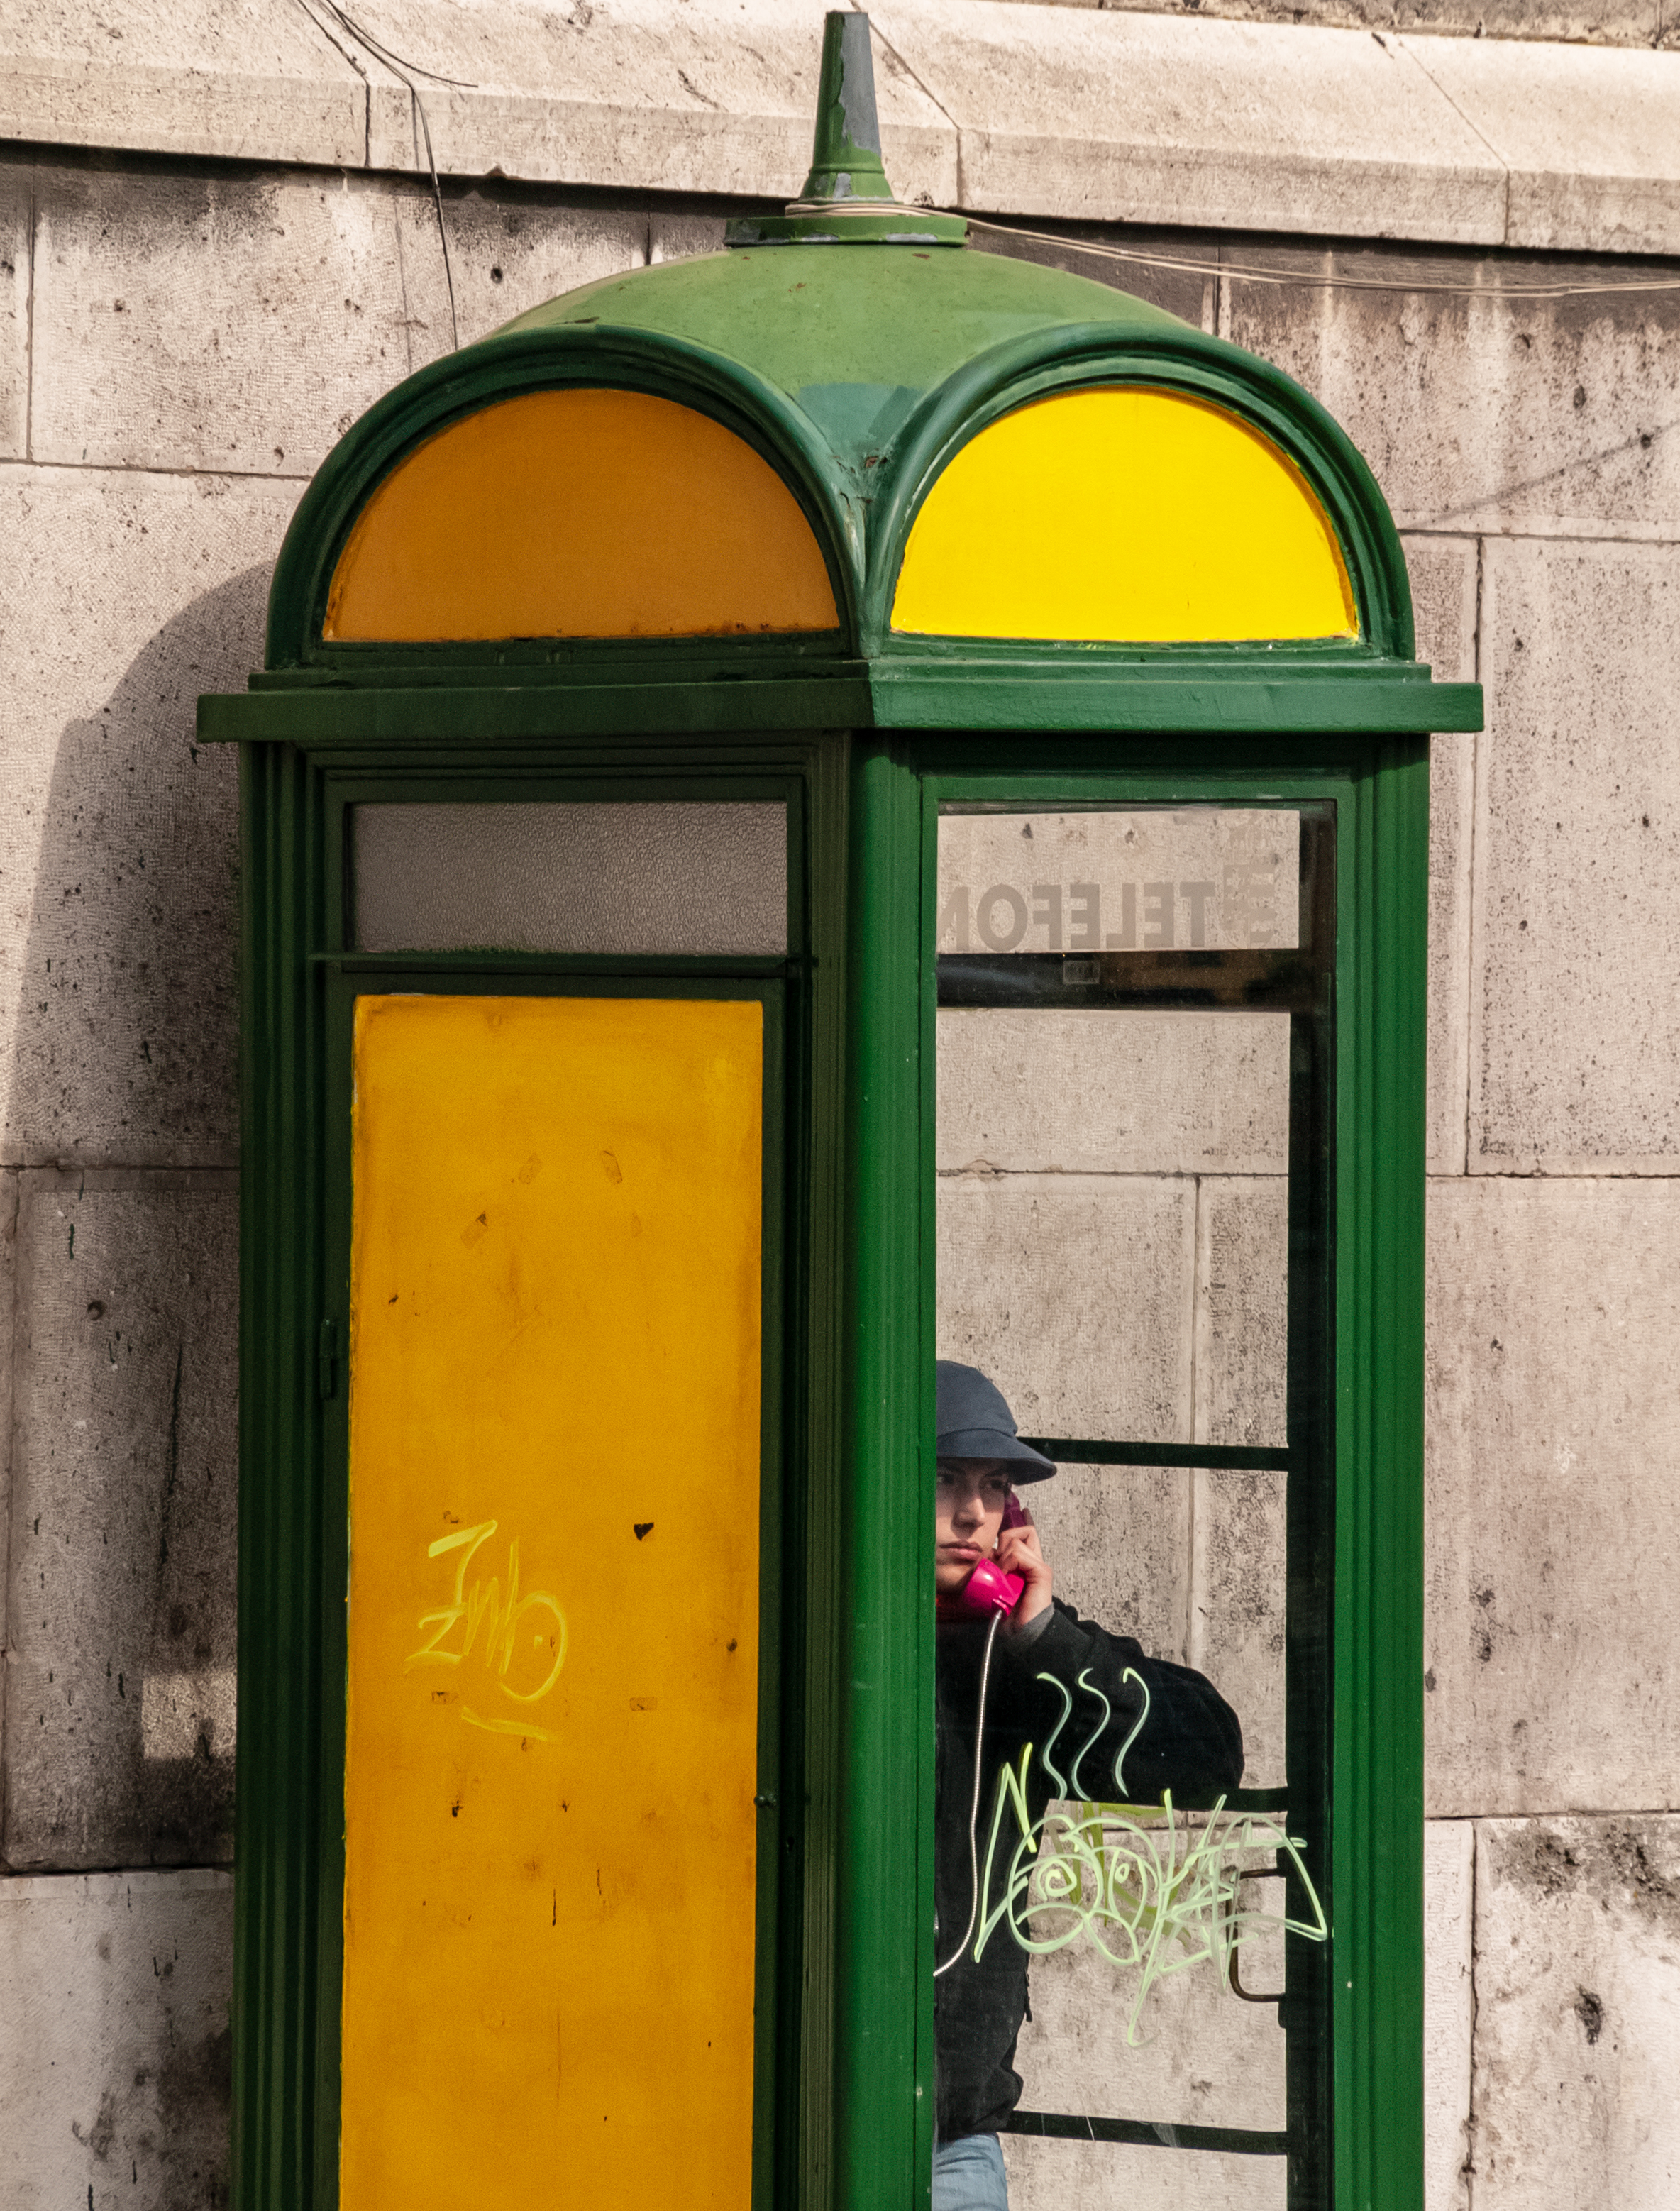 Budapest Telefon booth3210543